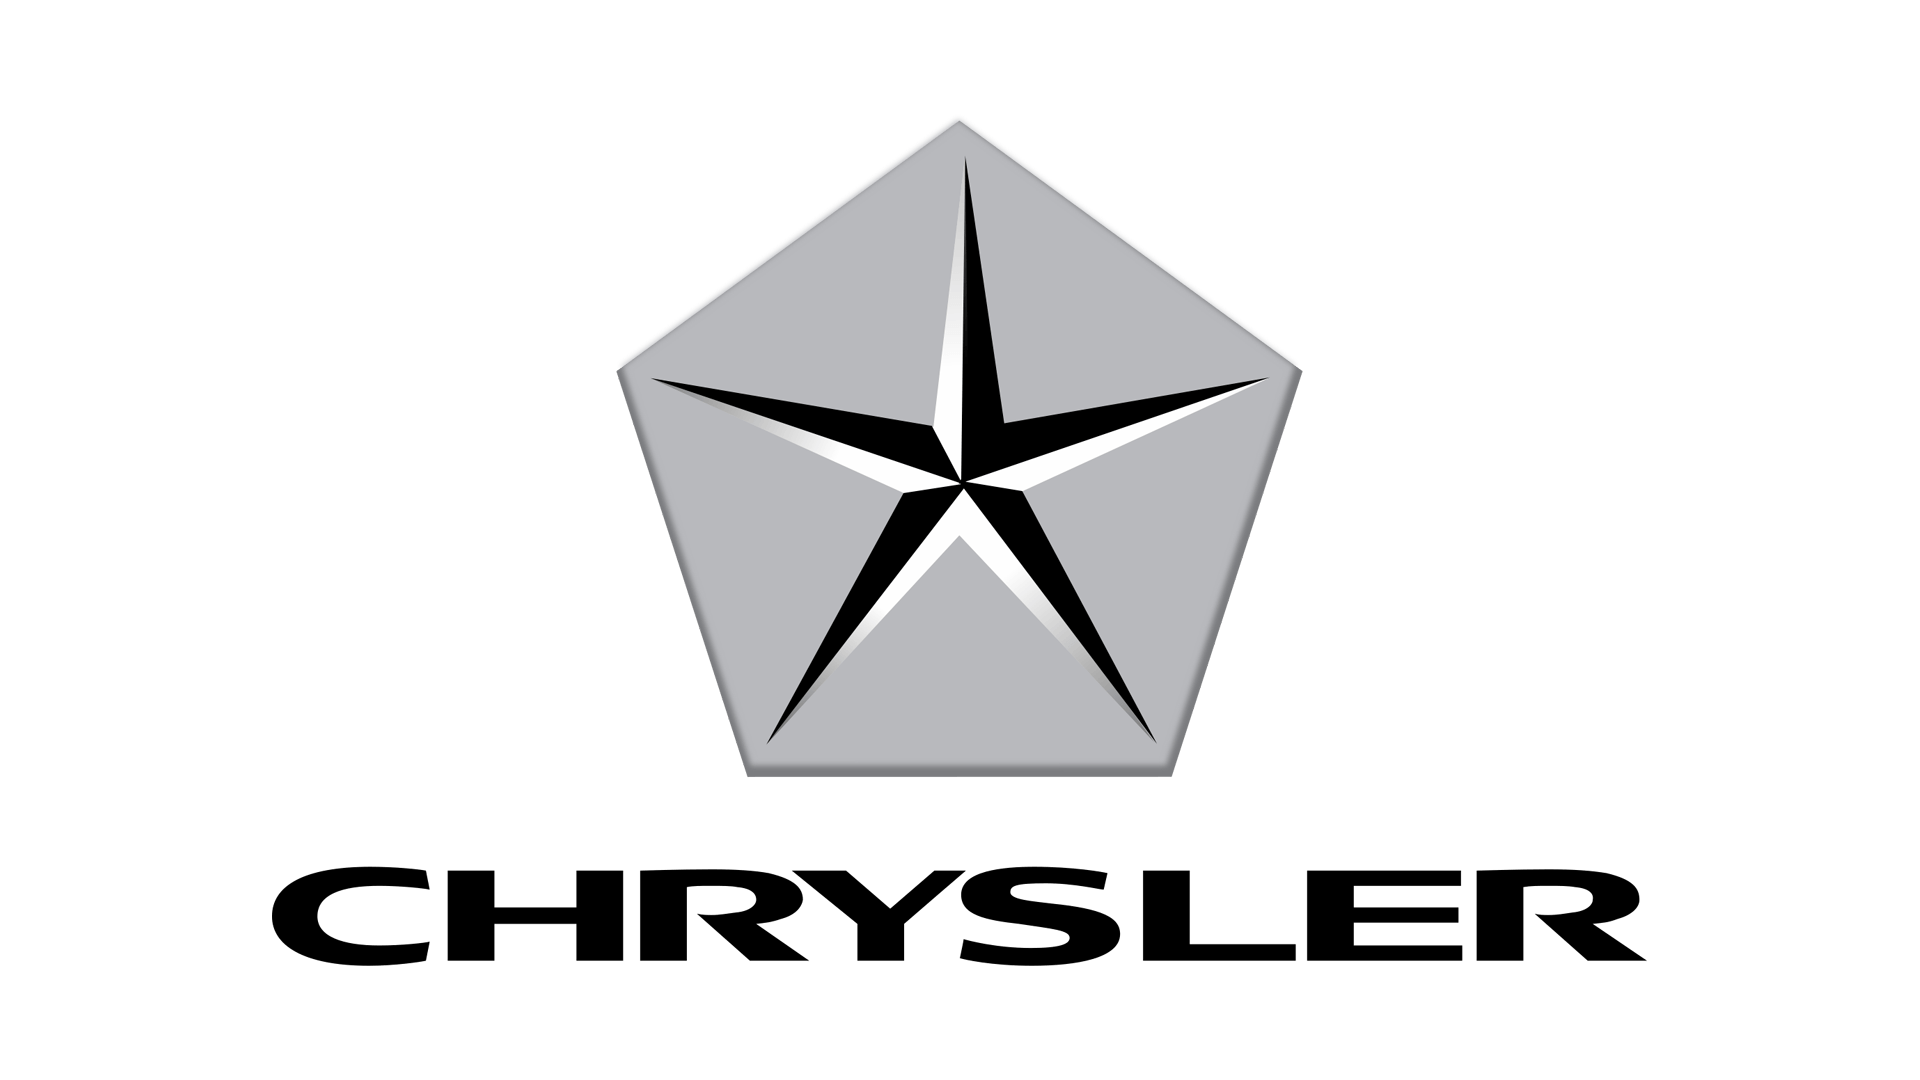 Chrysler Automotive Logo - Pin by Johnny Elf on Automobile Logos | Pinterest | Chrysler logo ...